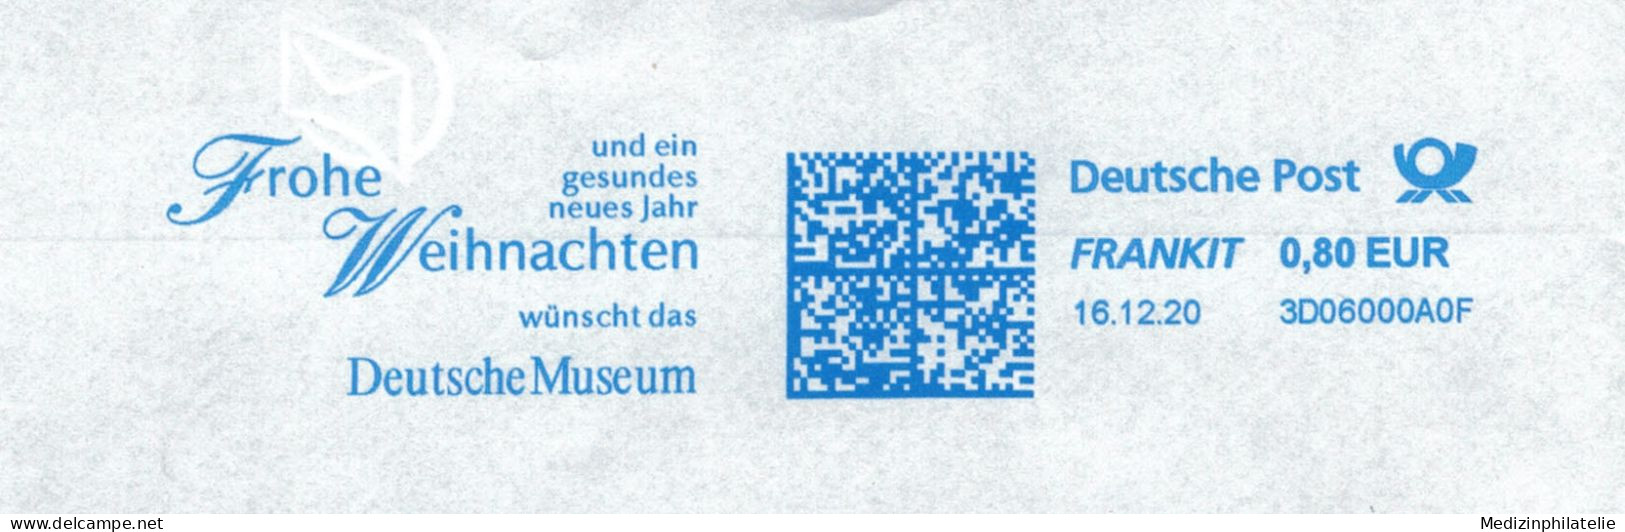 Frohe Weihnacht Wünscht Deutsches Museum  2020 - Museen